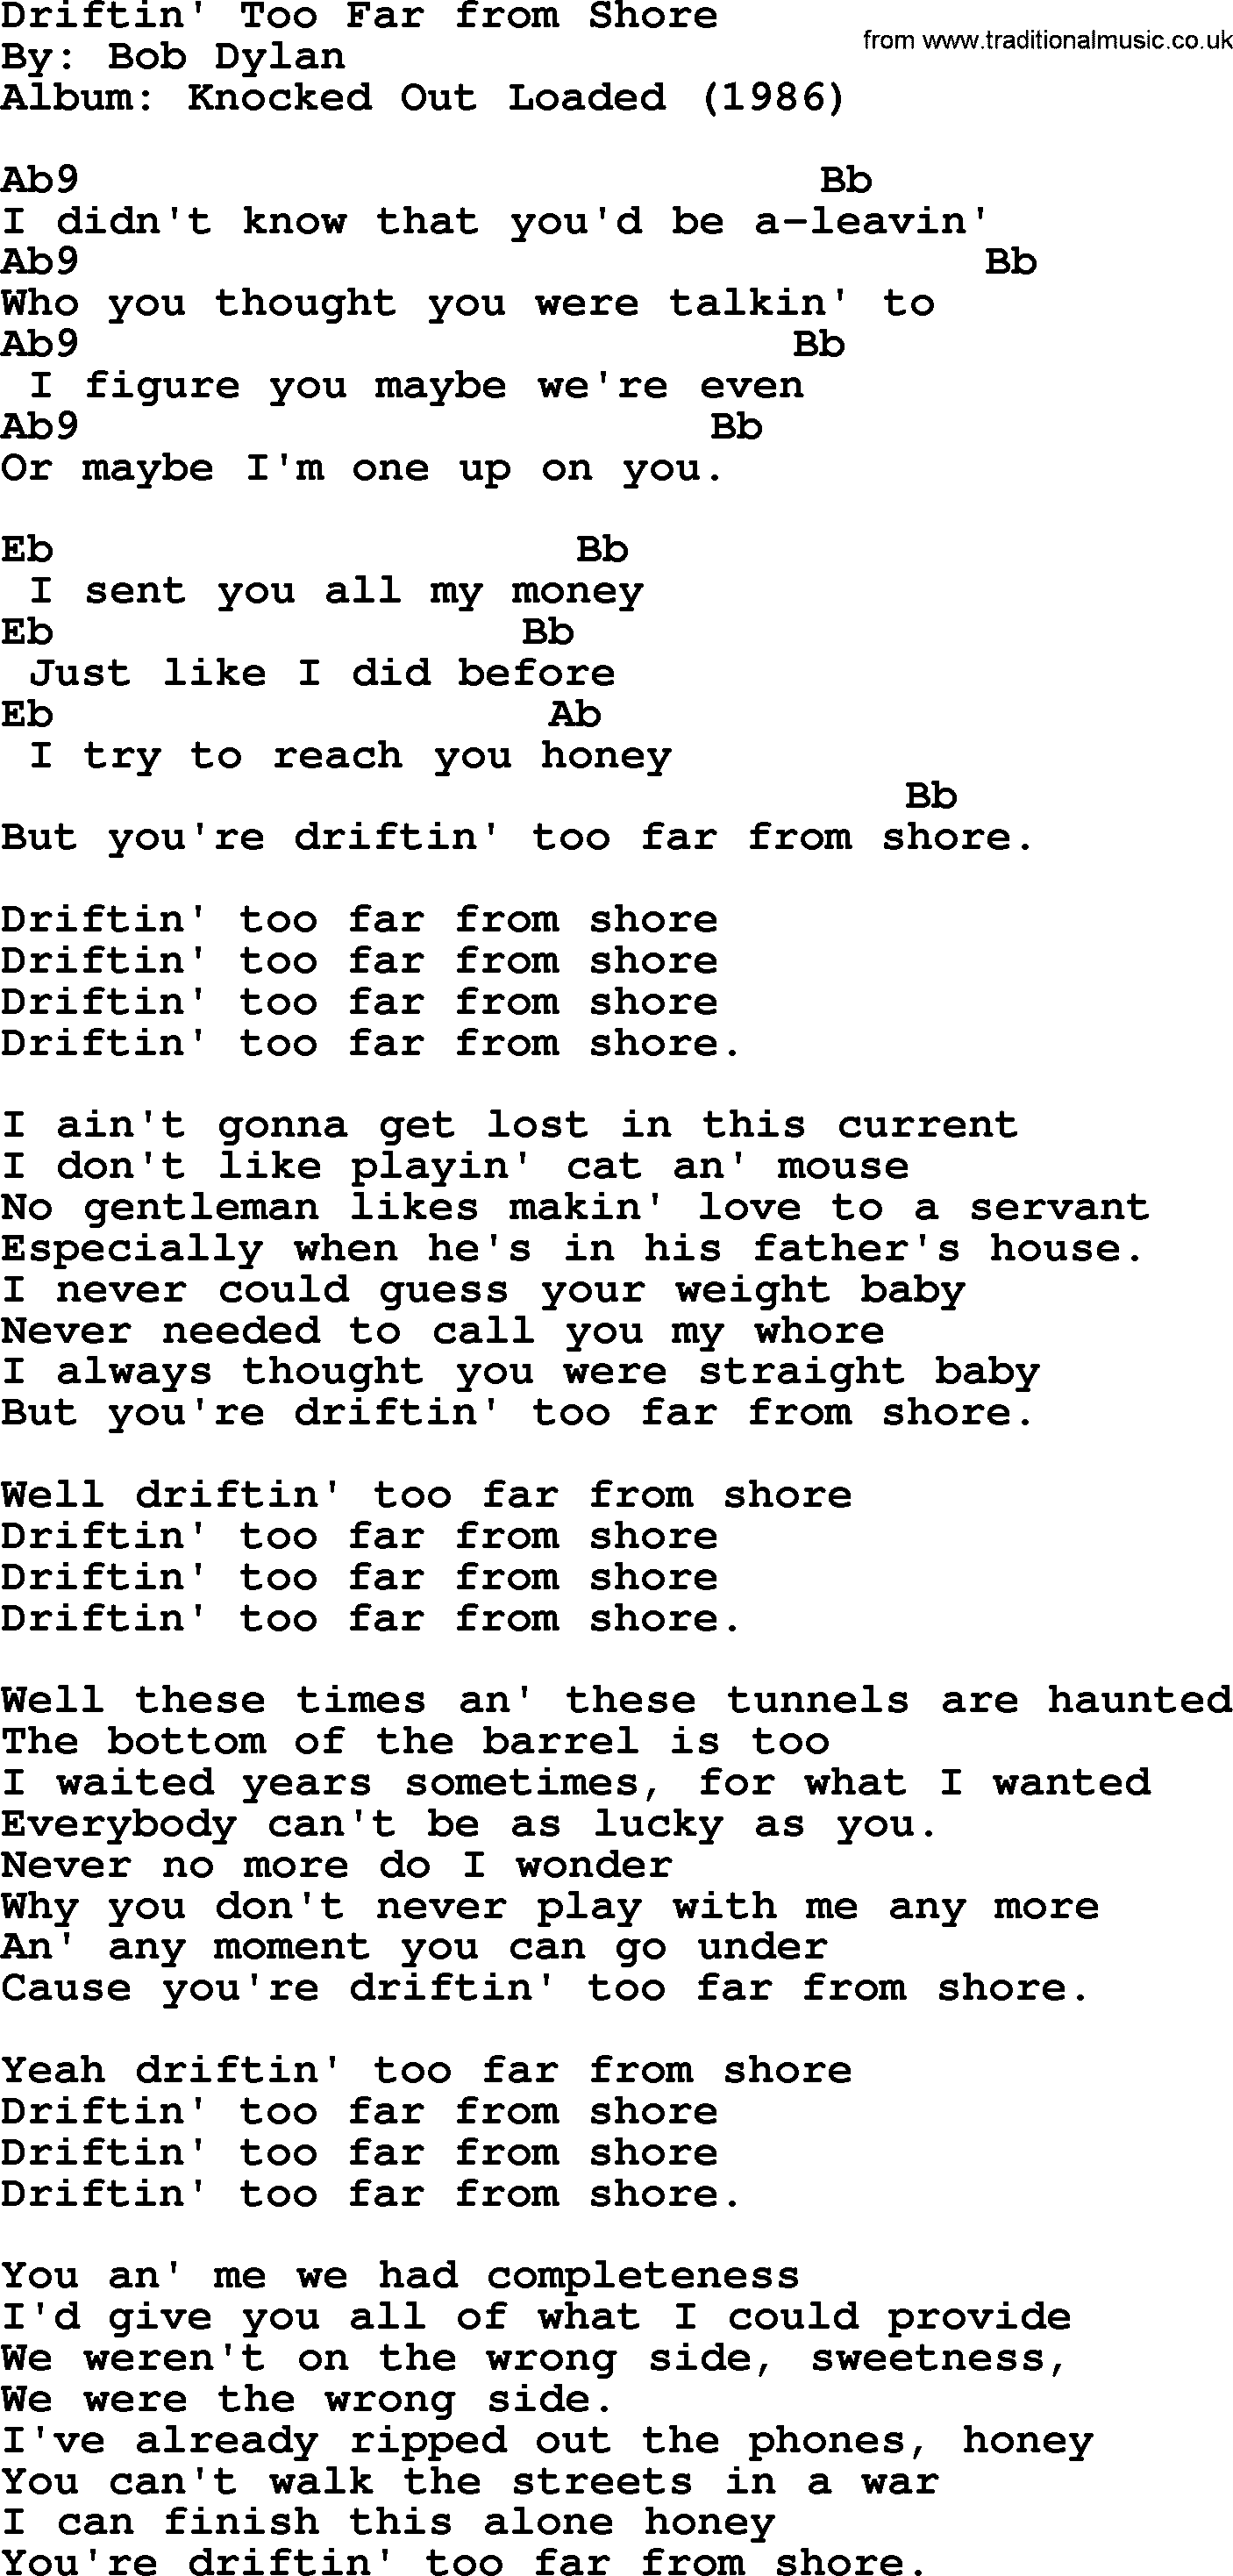 Bob Dylan song, lyrics with chords - Driftin' Too Far from Shore